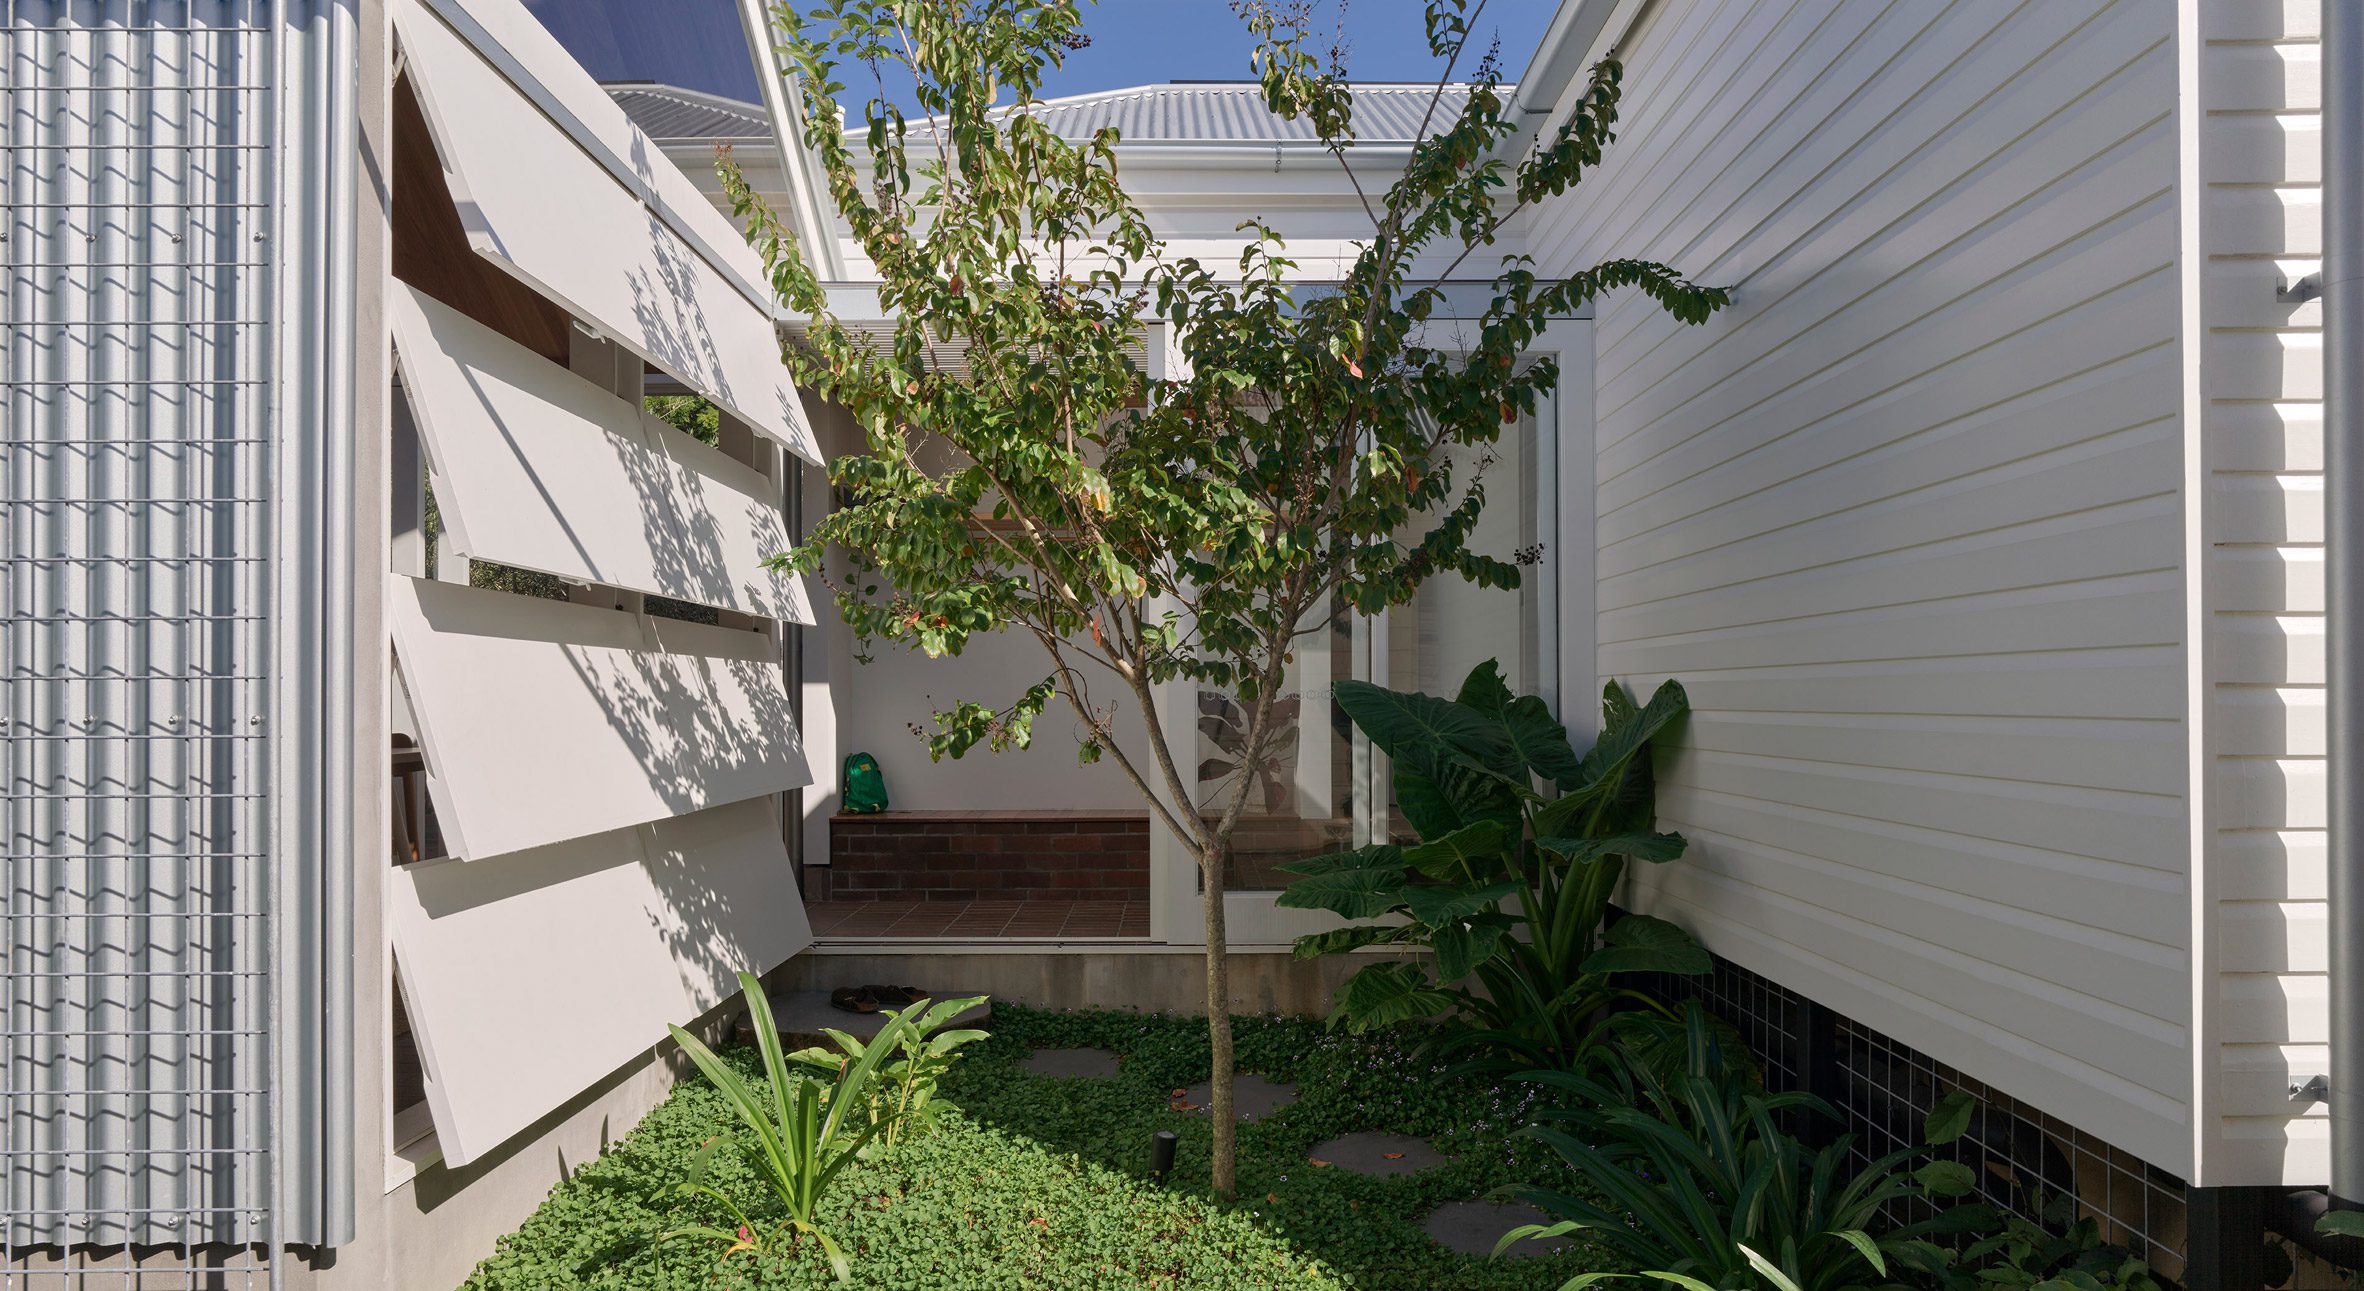 Home courtyard in Brisbane, Australia